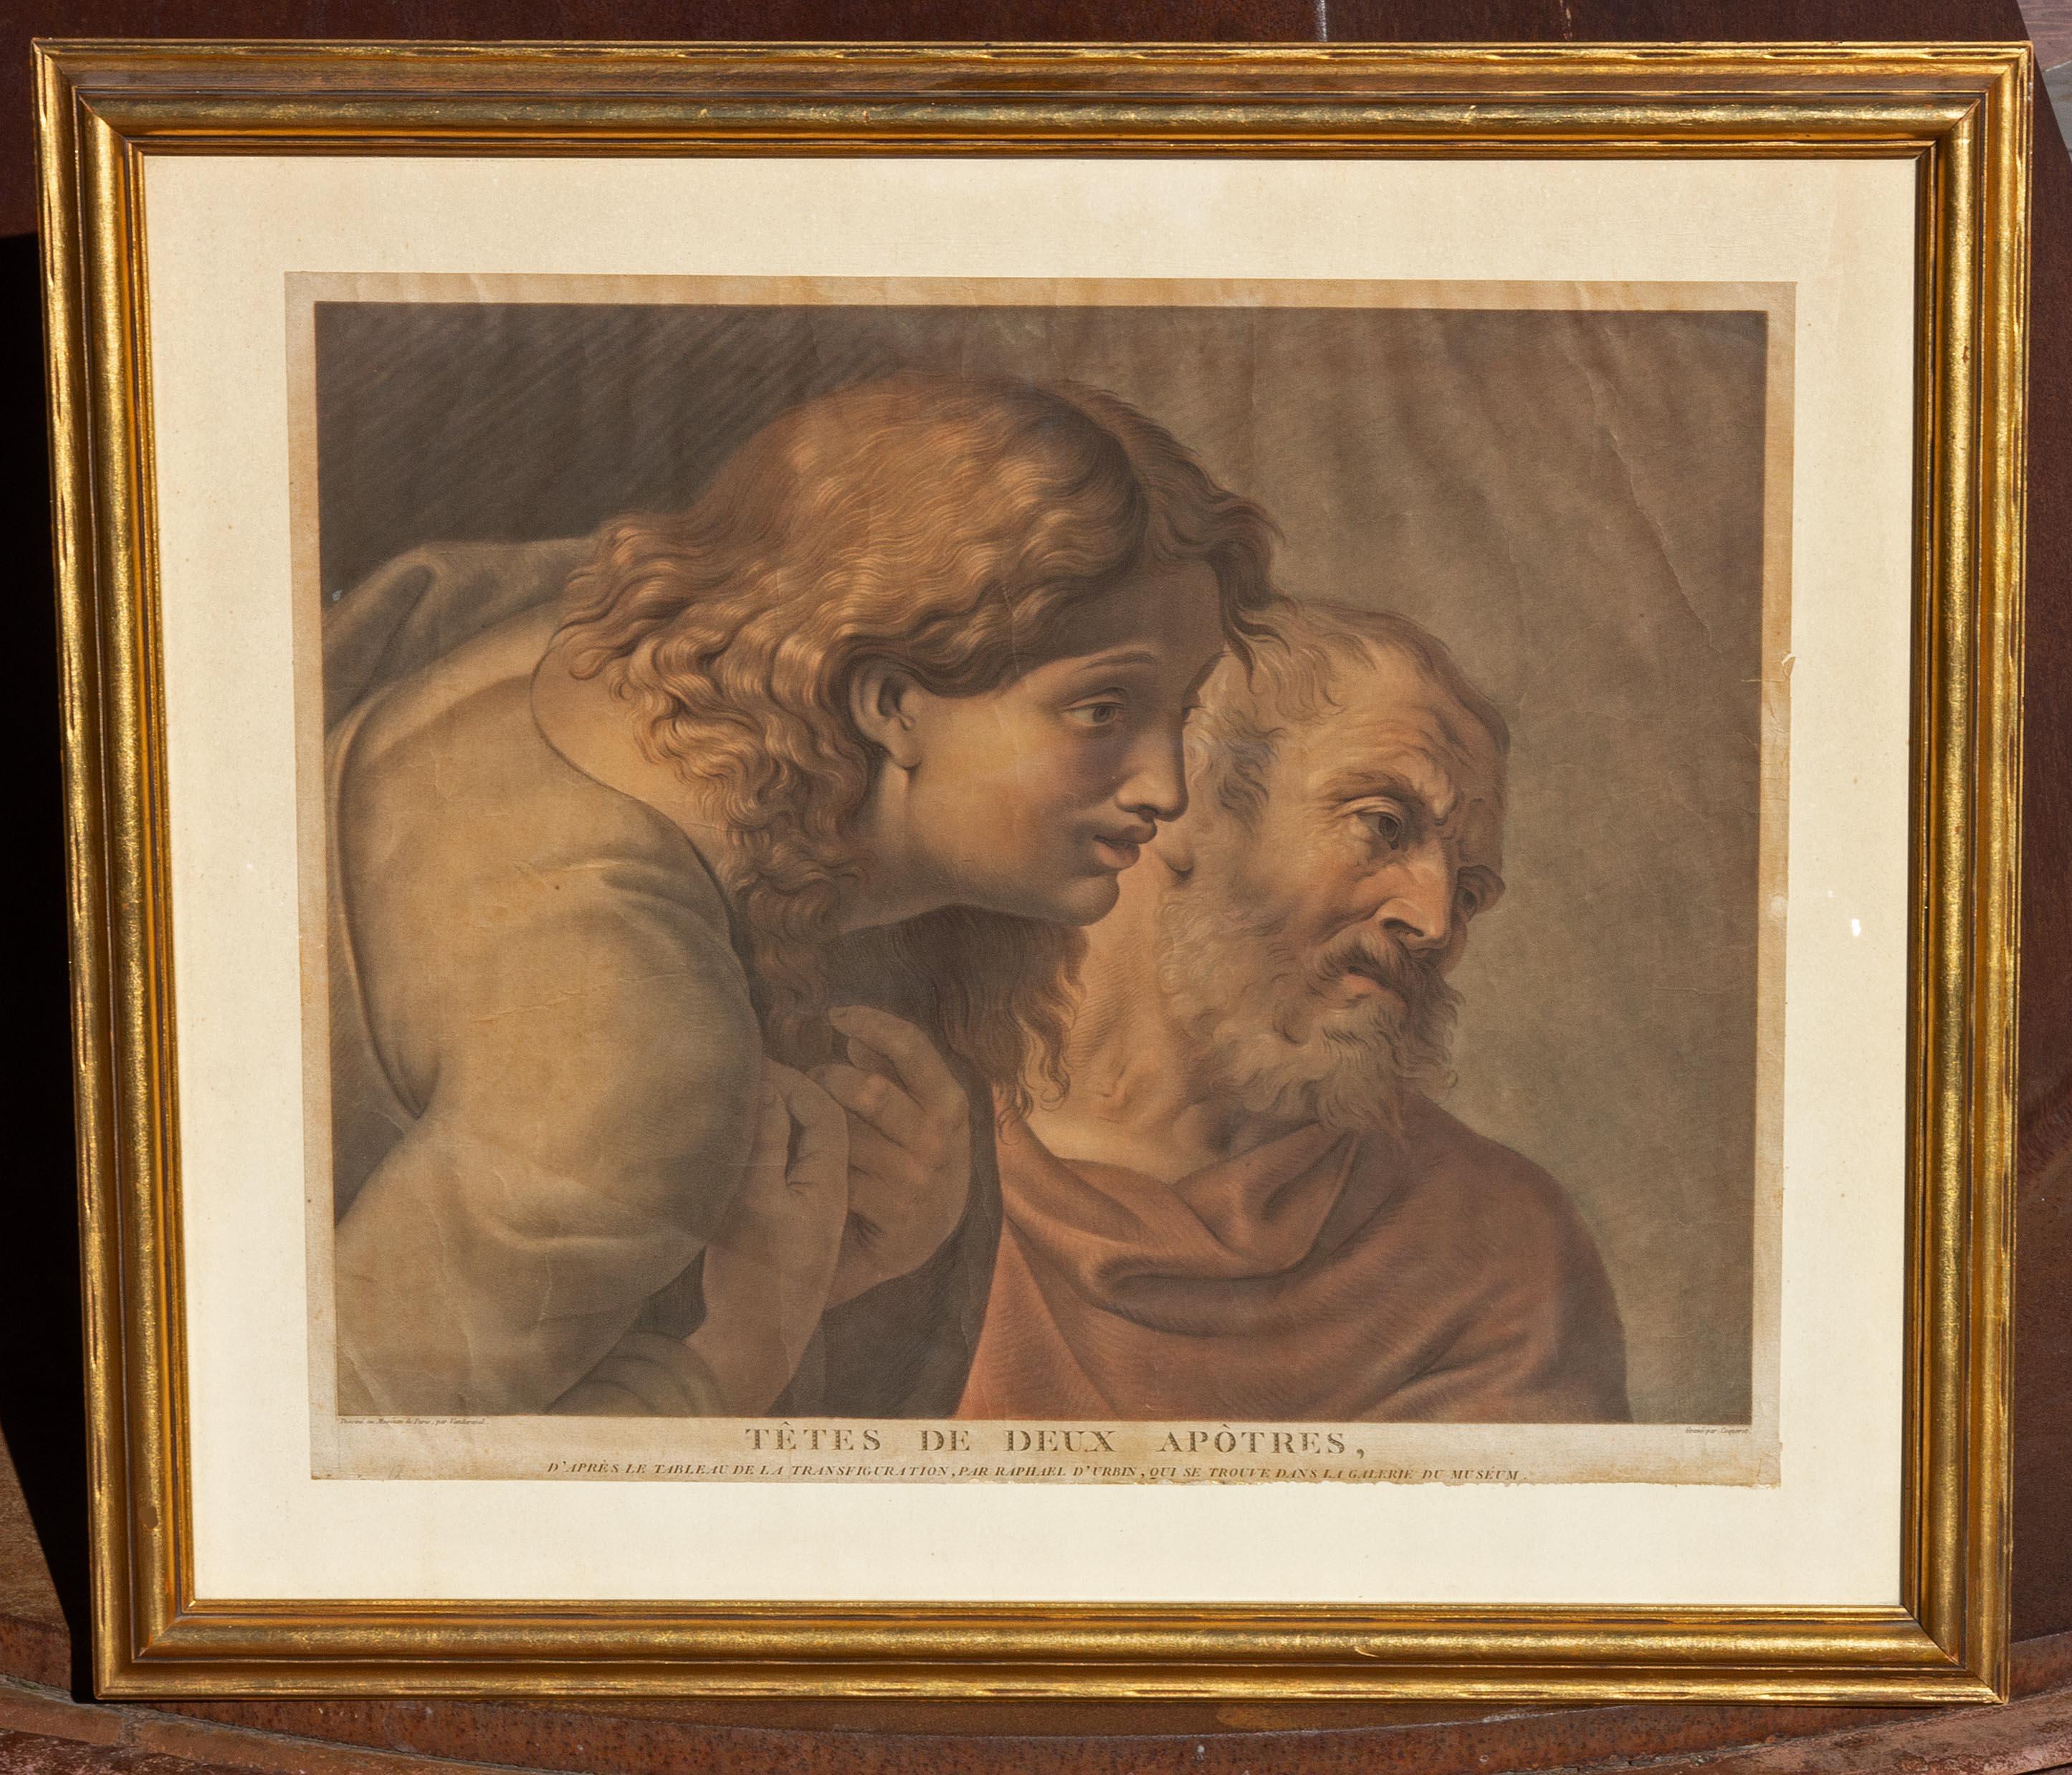 Gravure de Masterly Têtes de deux apôtres d'après Raphael - Print de (after) Raphael (Raffaello Sanzio da Urbino)